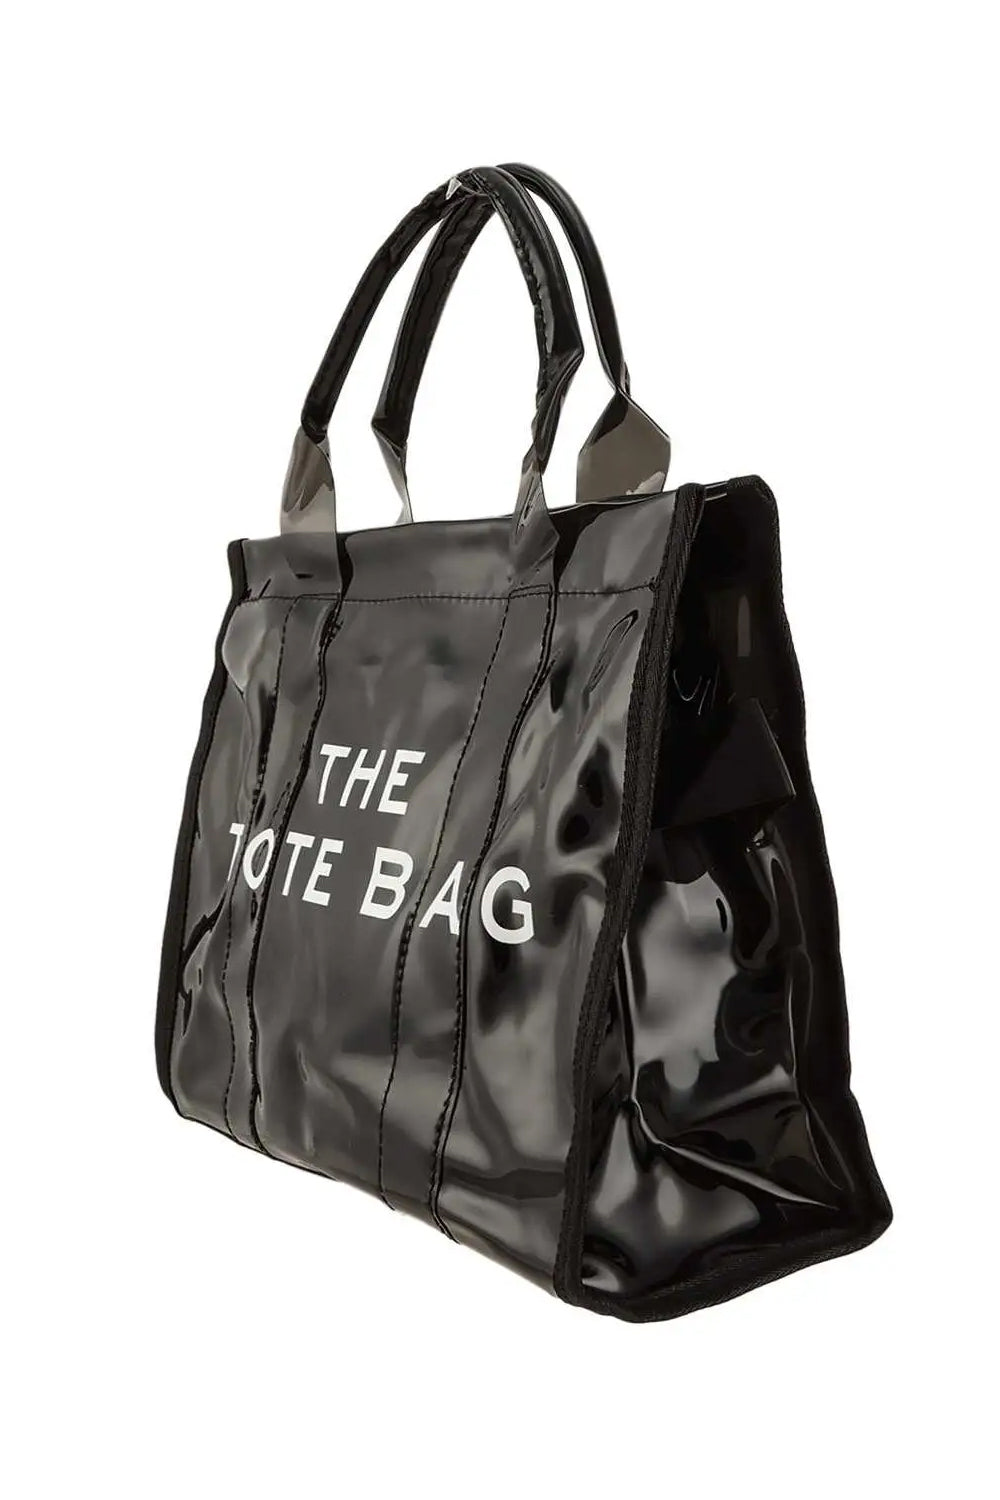 THE TOTE BAG Medium Crossbody Bag - Black | Makk Fashions